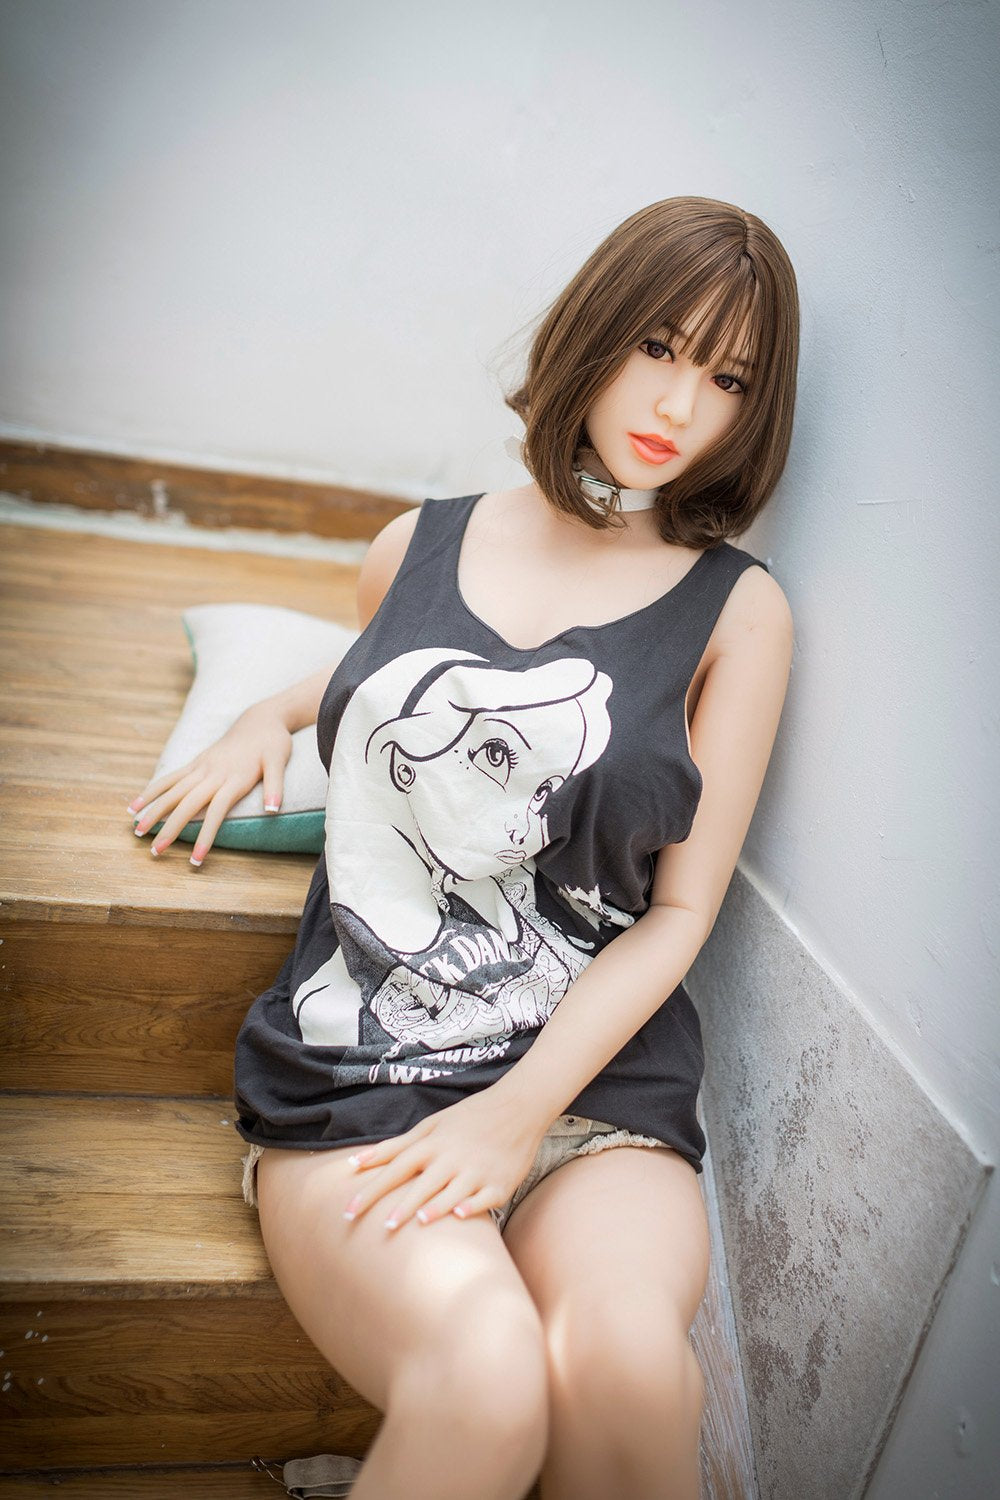 elle 168cm brown hair japanese big boobs athletic skinny tpe wm asian sex doll(4)